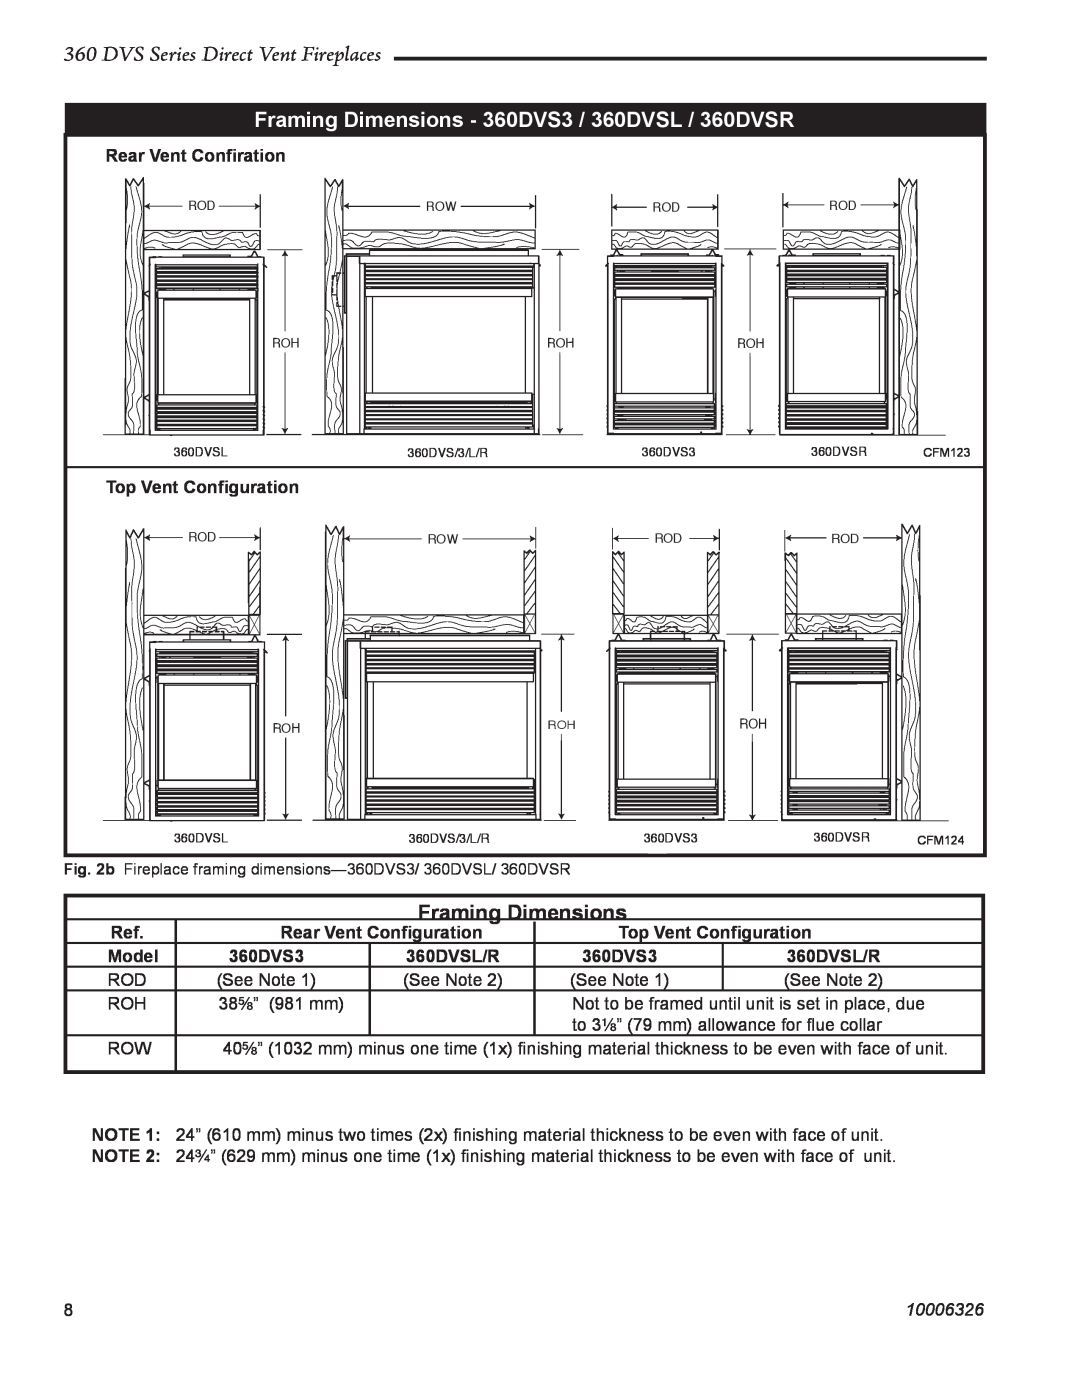 Majestic Appliances 360DVS2 Framing Dimensions - 360DVS3 / 360DVSL / 360DVSR, DVS Series Direct Vent Fireplaces, Model 